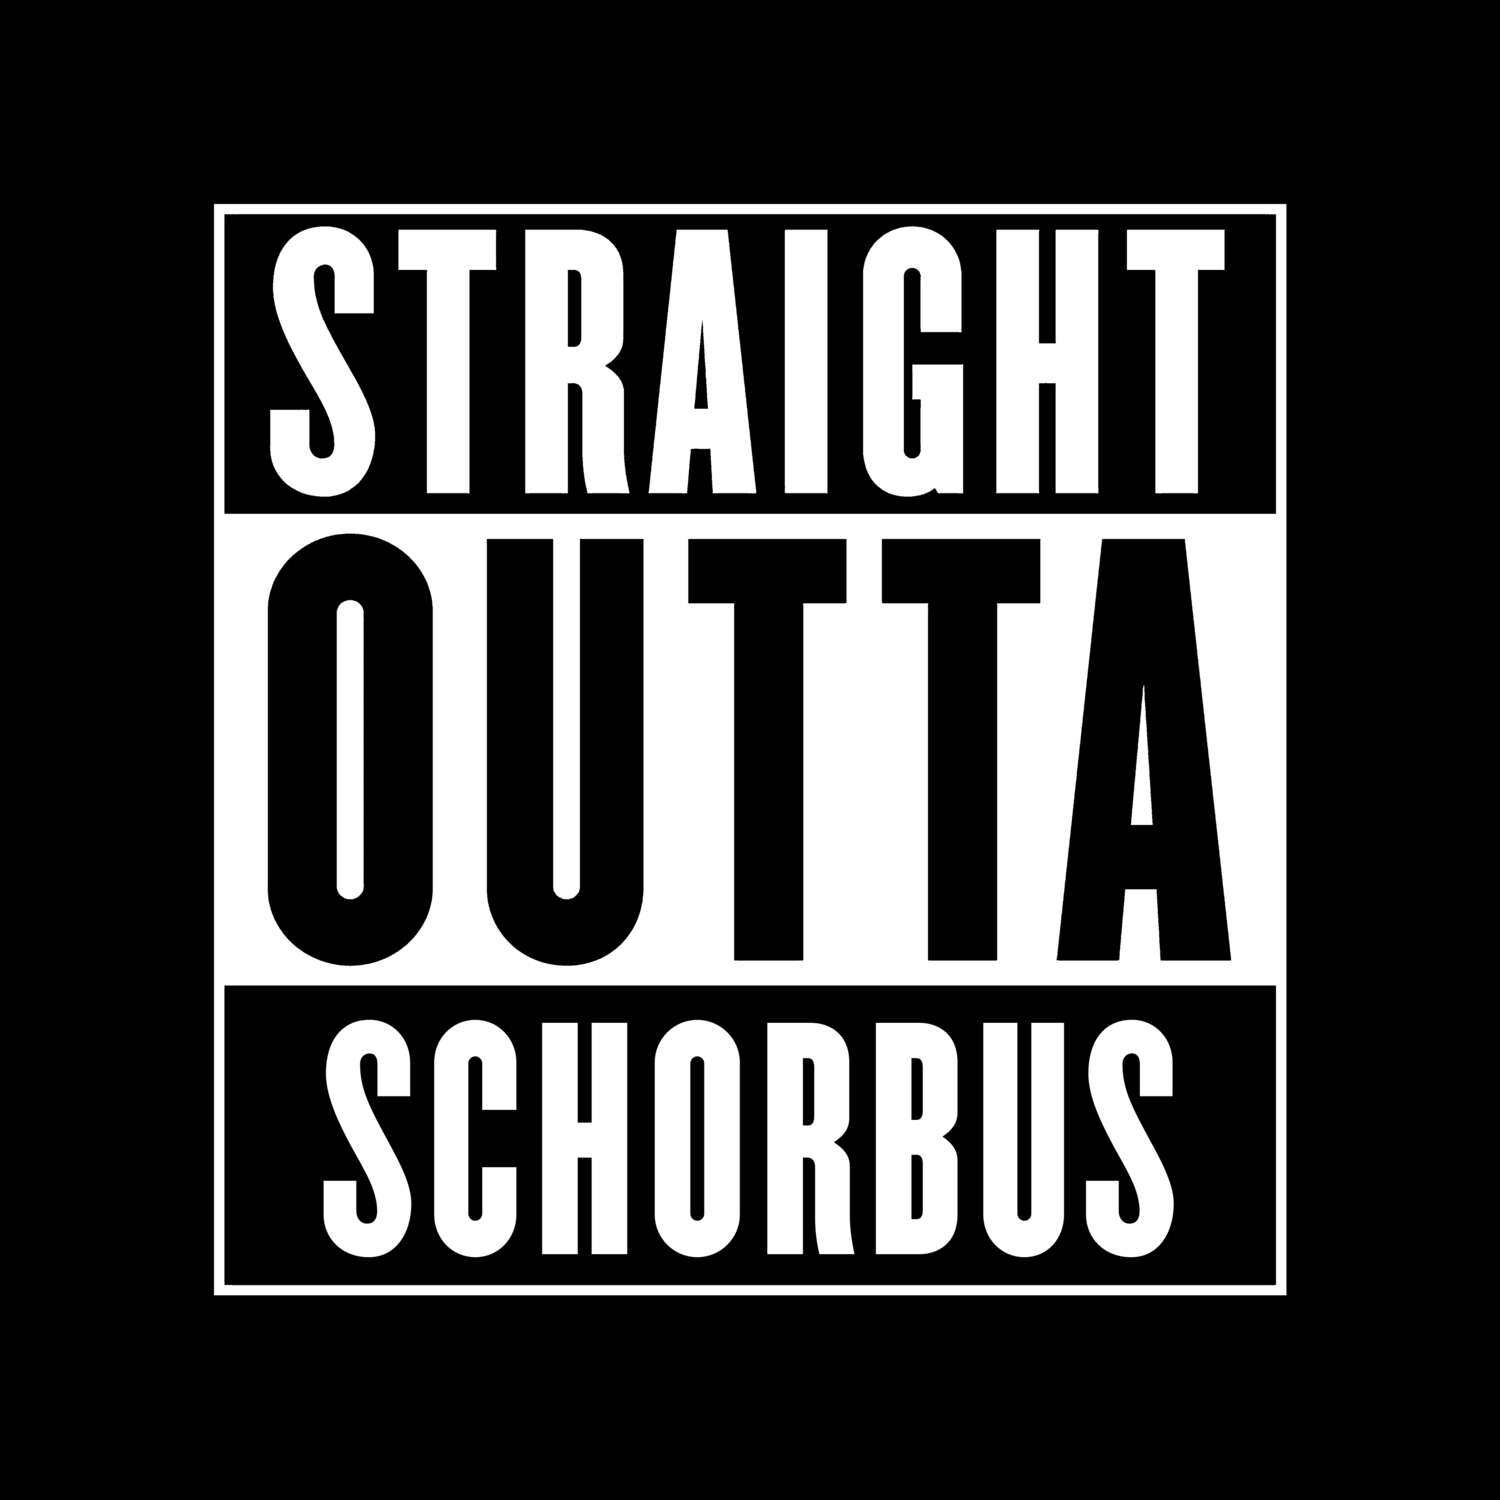 Schorbus T-Shirt »Straight Outta«